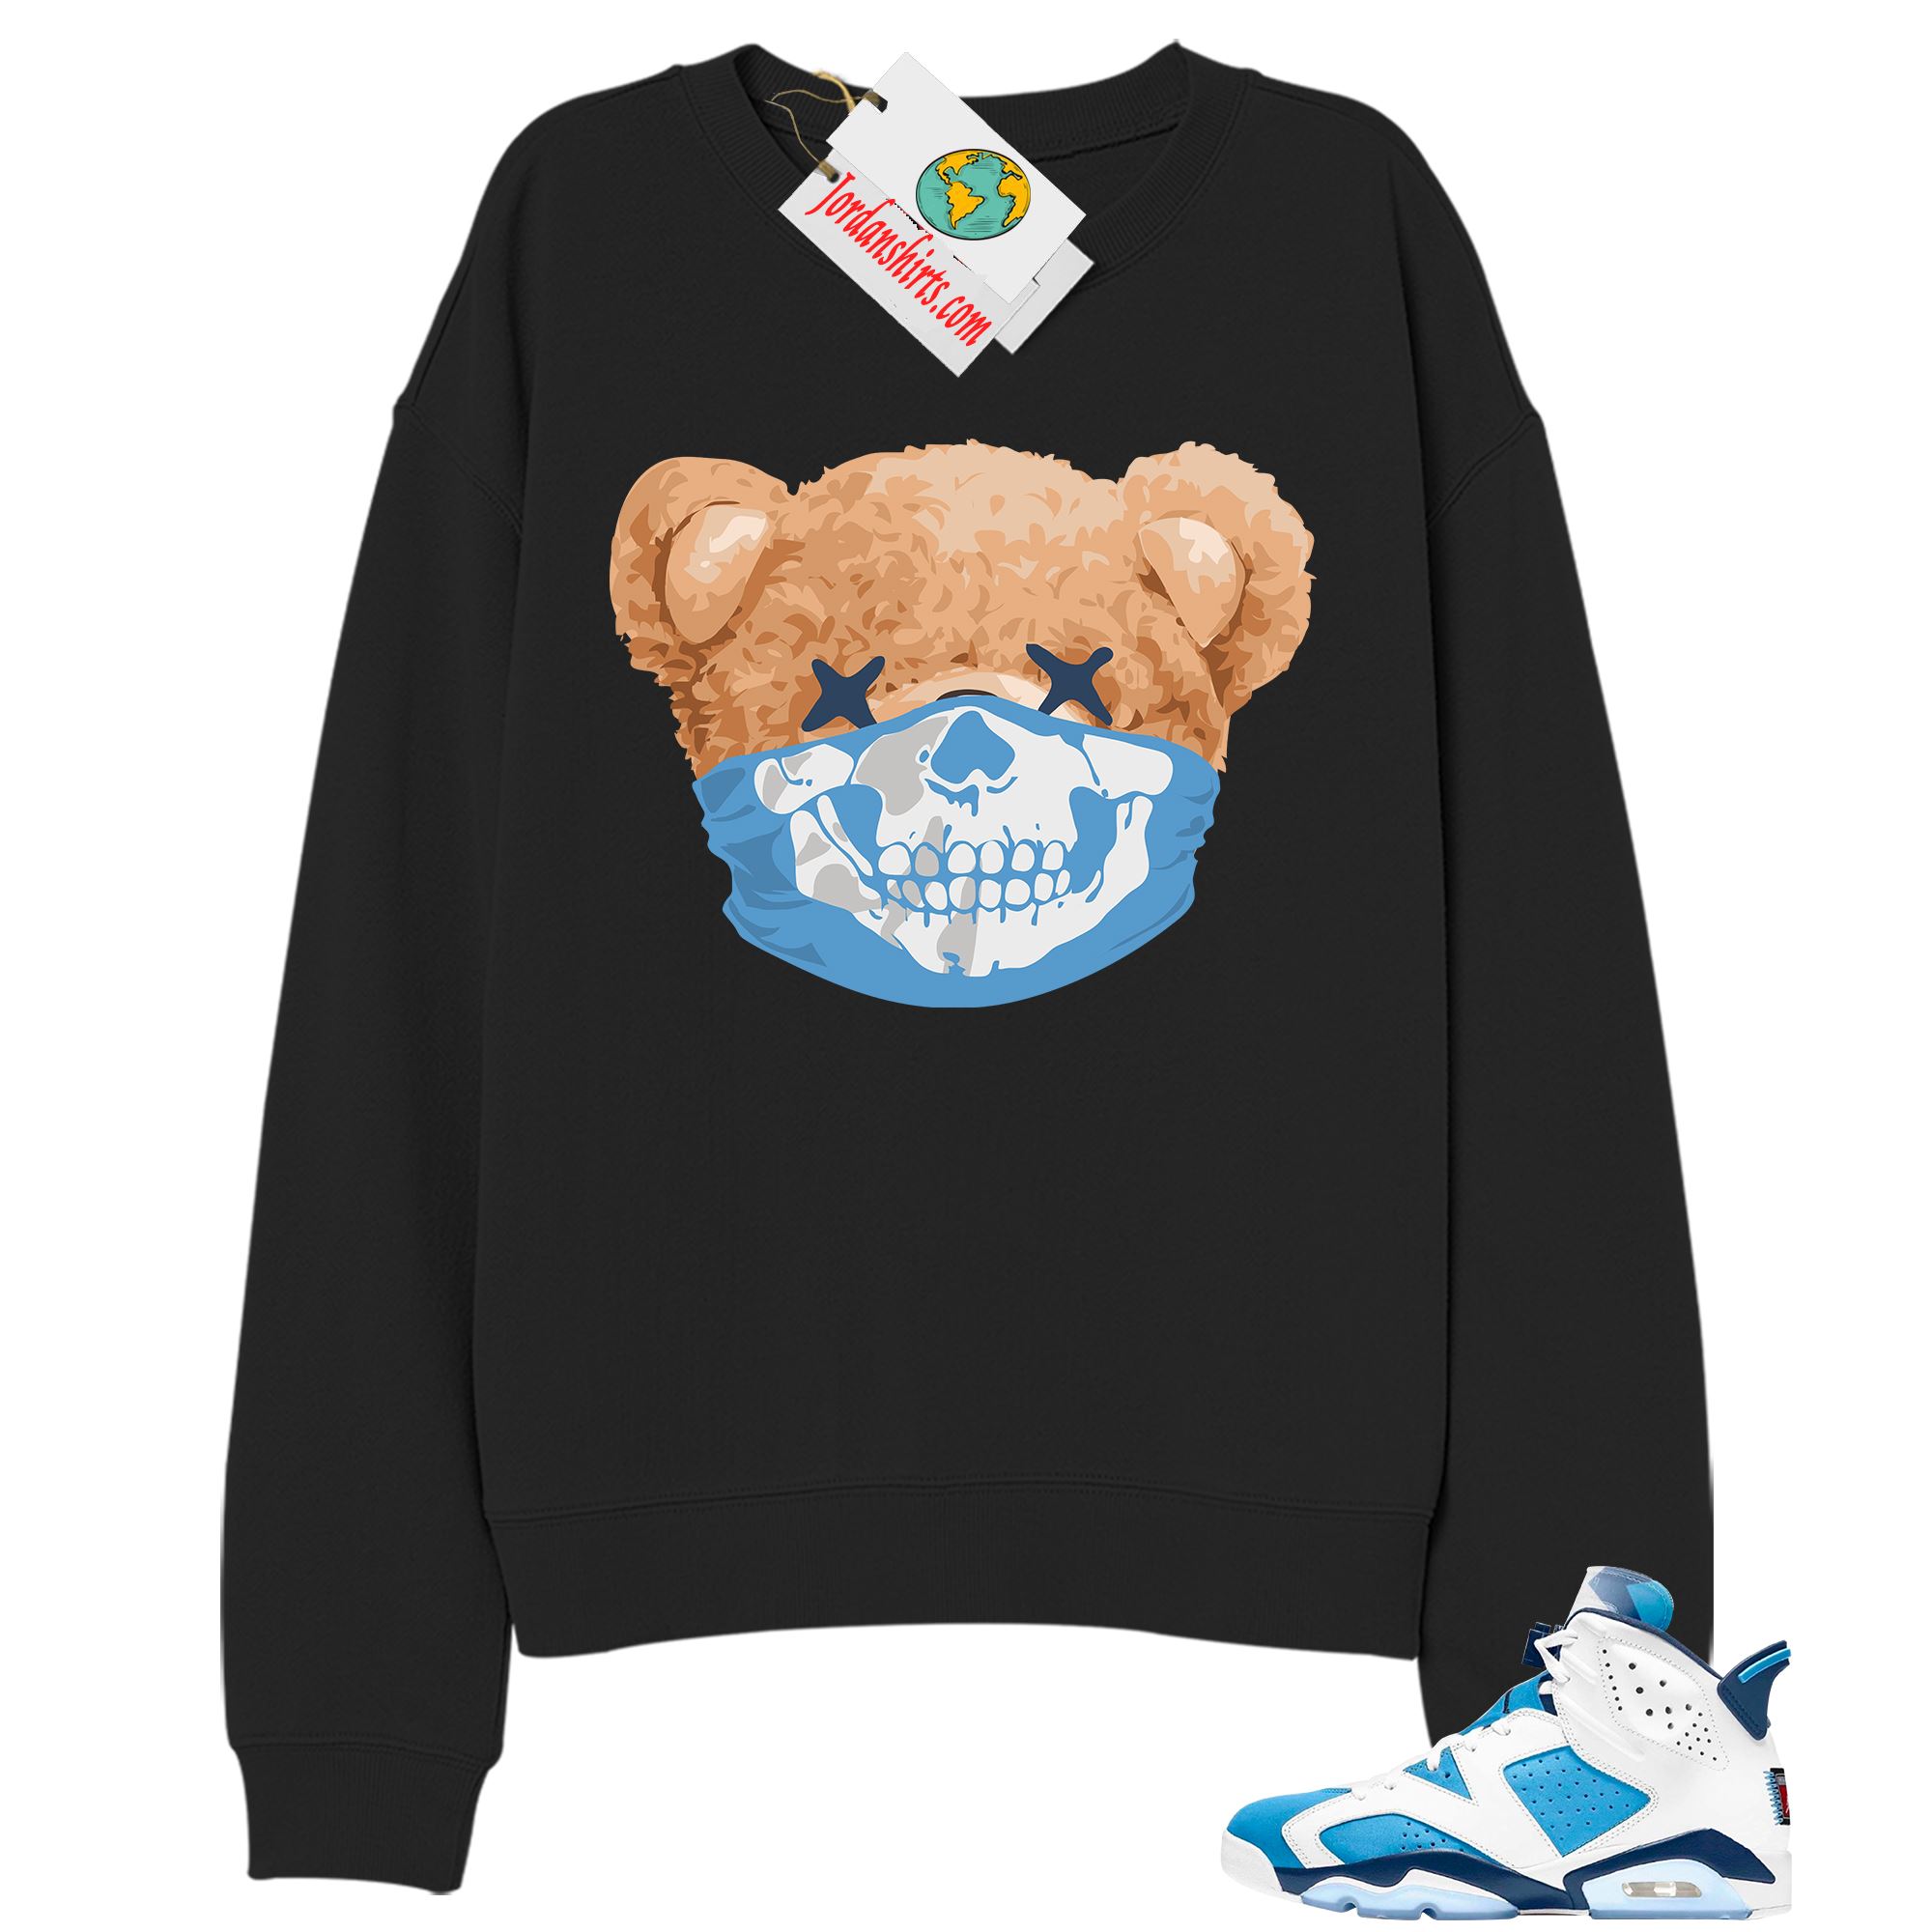 Jordan 6 Sweatshirt, Teddy Bear Skull Bandana Black Sweatshirt Air Jordan 6 Unc 6s Size Up To 5xl